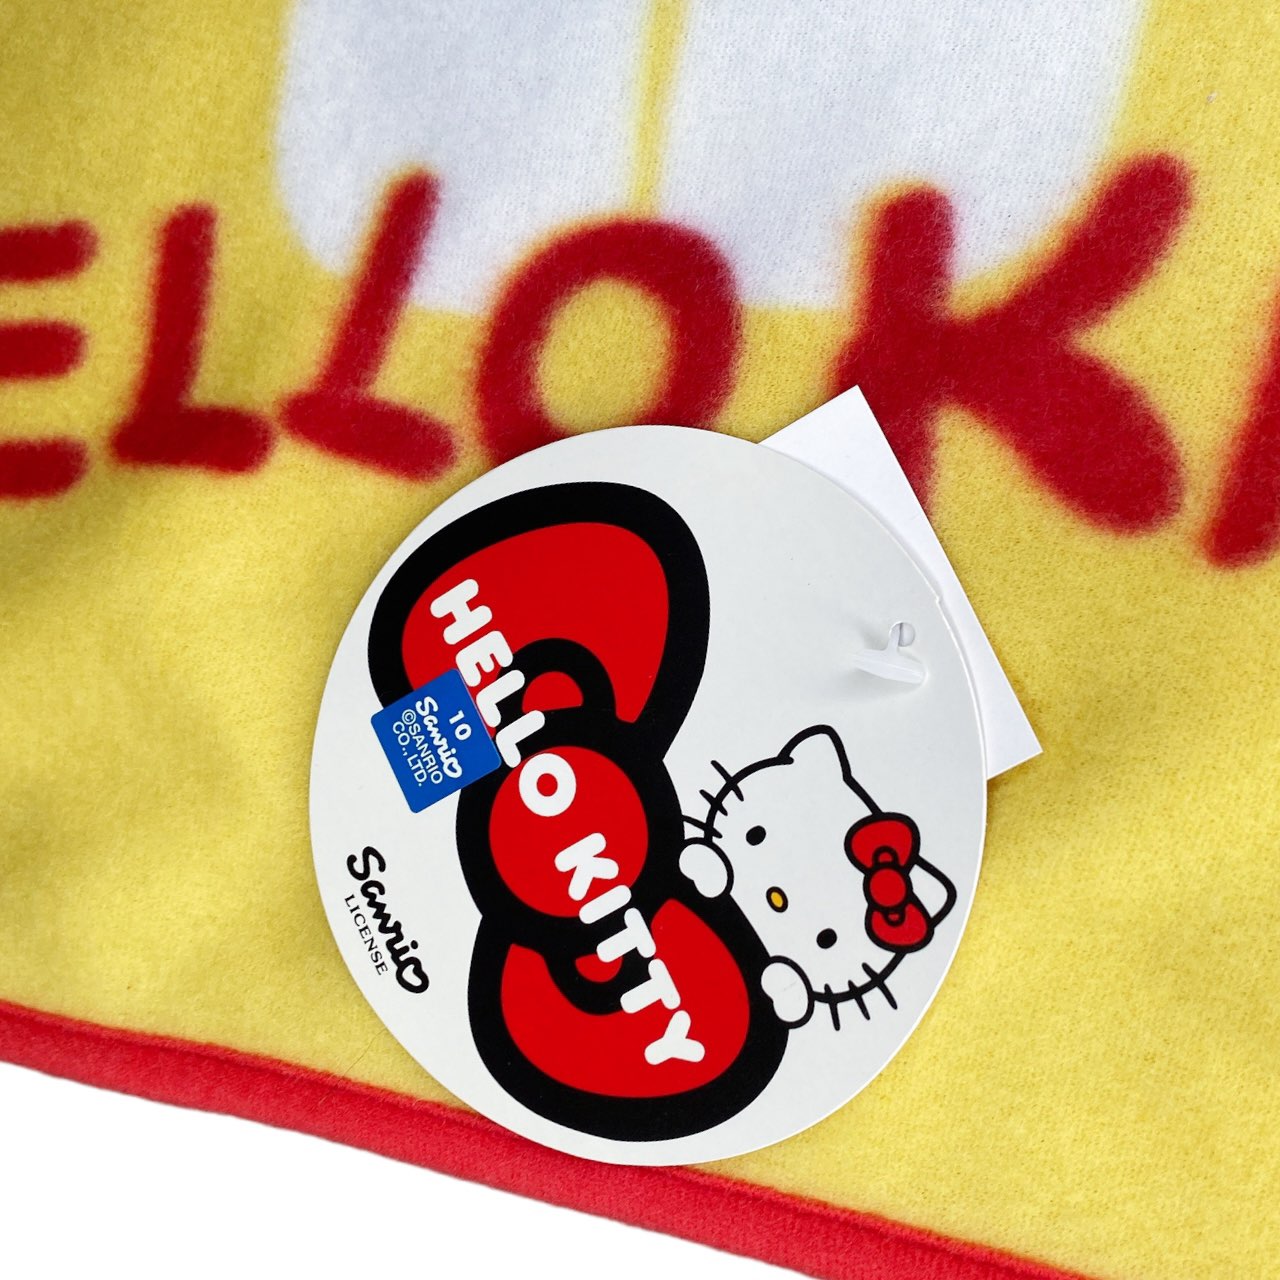 2007 Sanrio Hello Kitty Kidcore Kawaii Fleece Blanket Throw